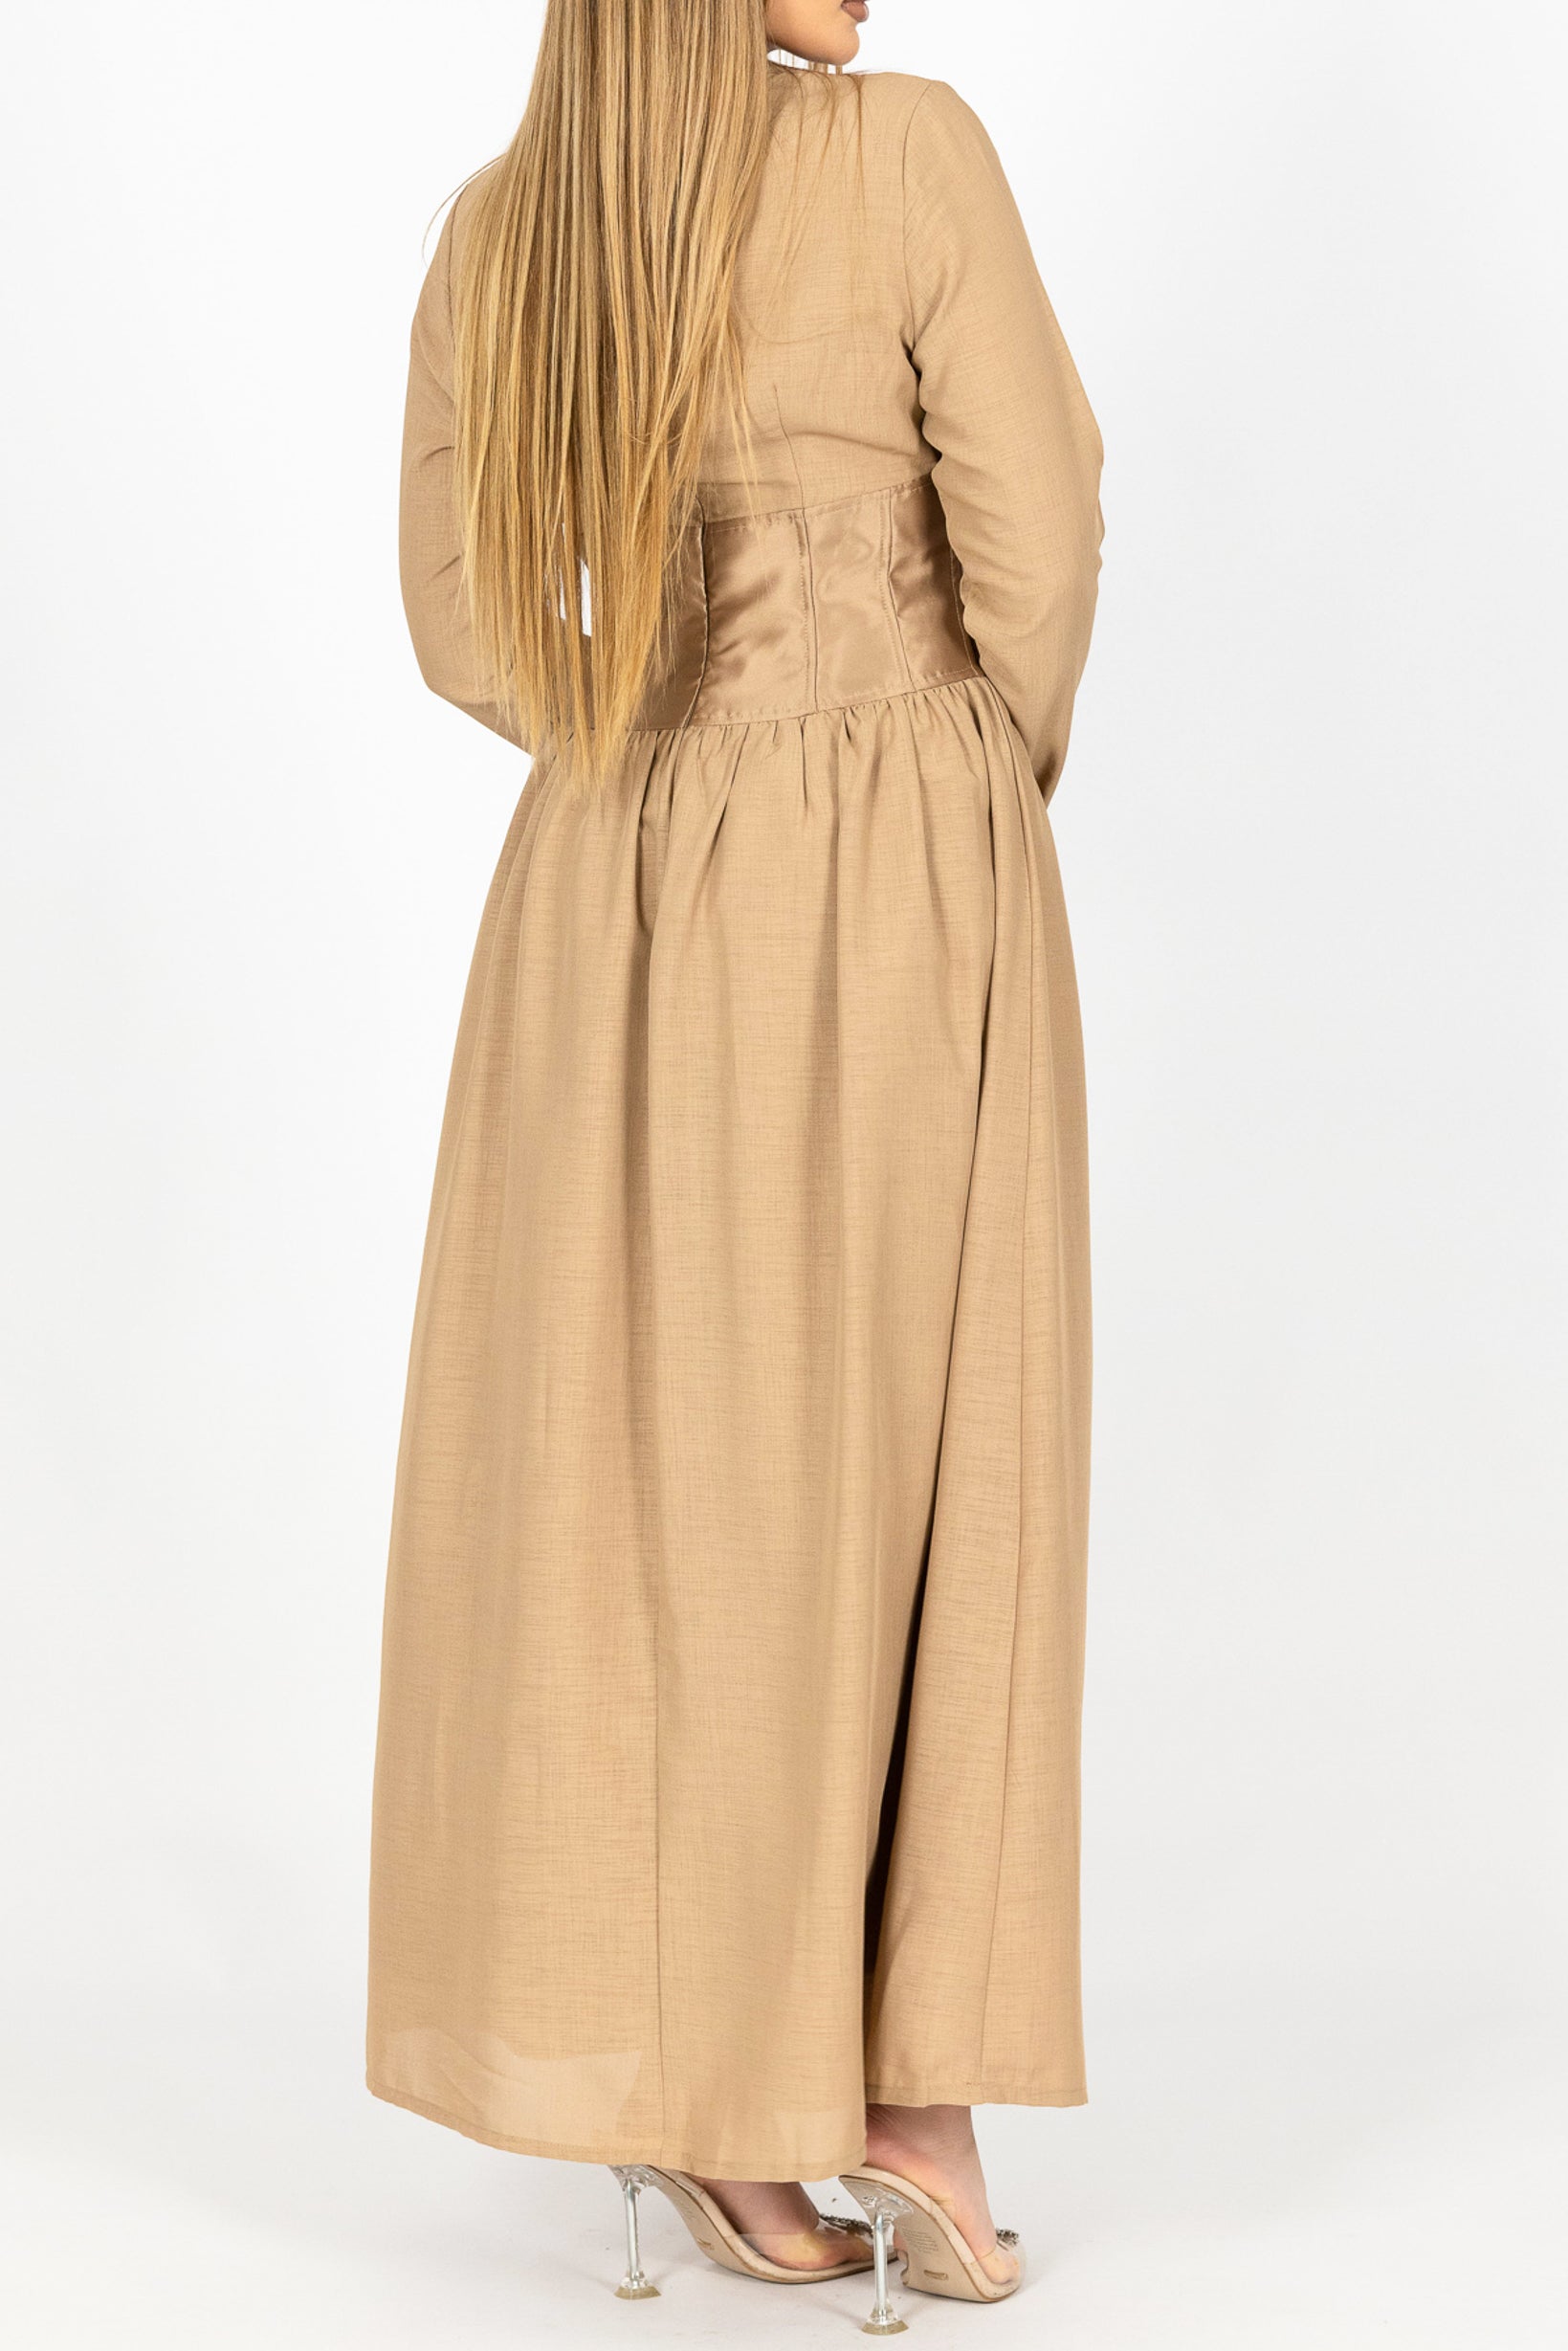 M7909Coffee-dress-abaya